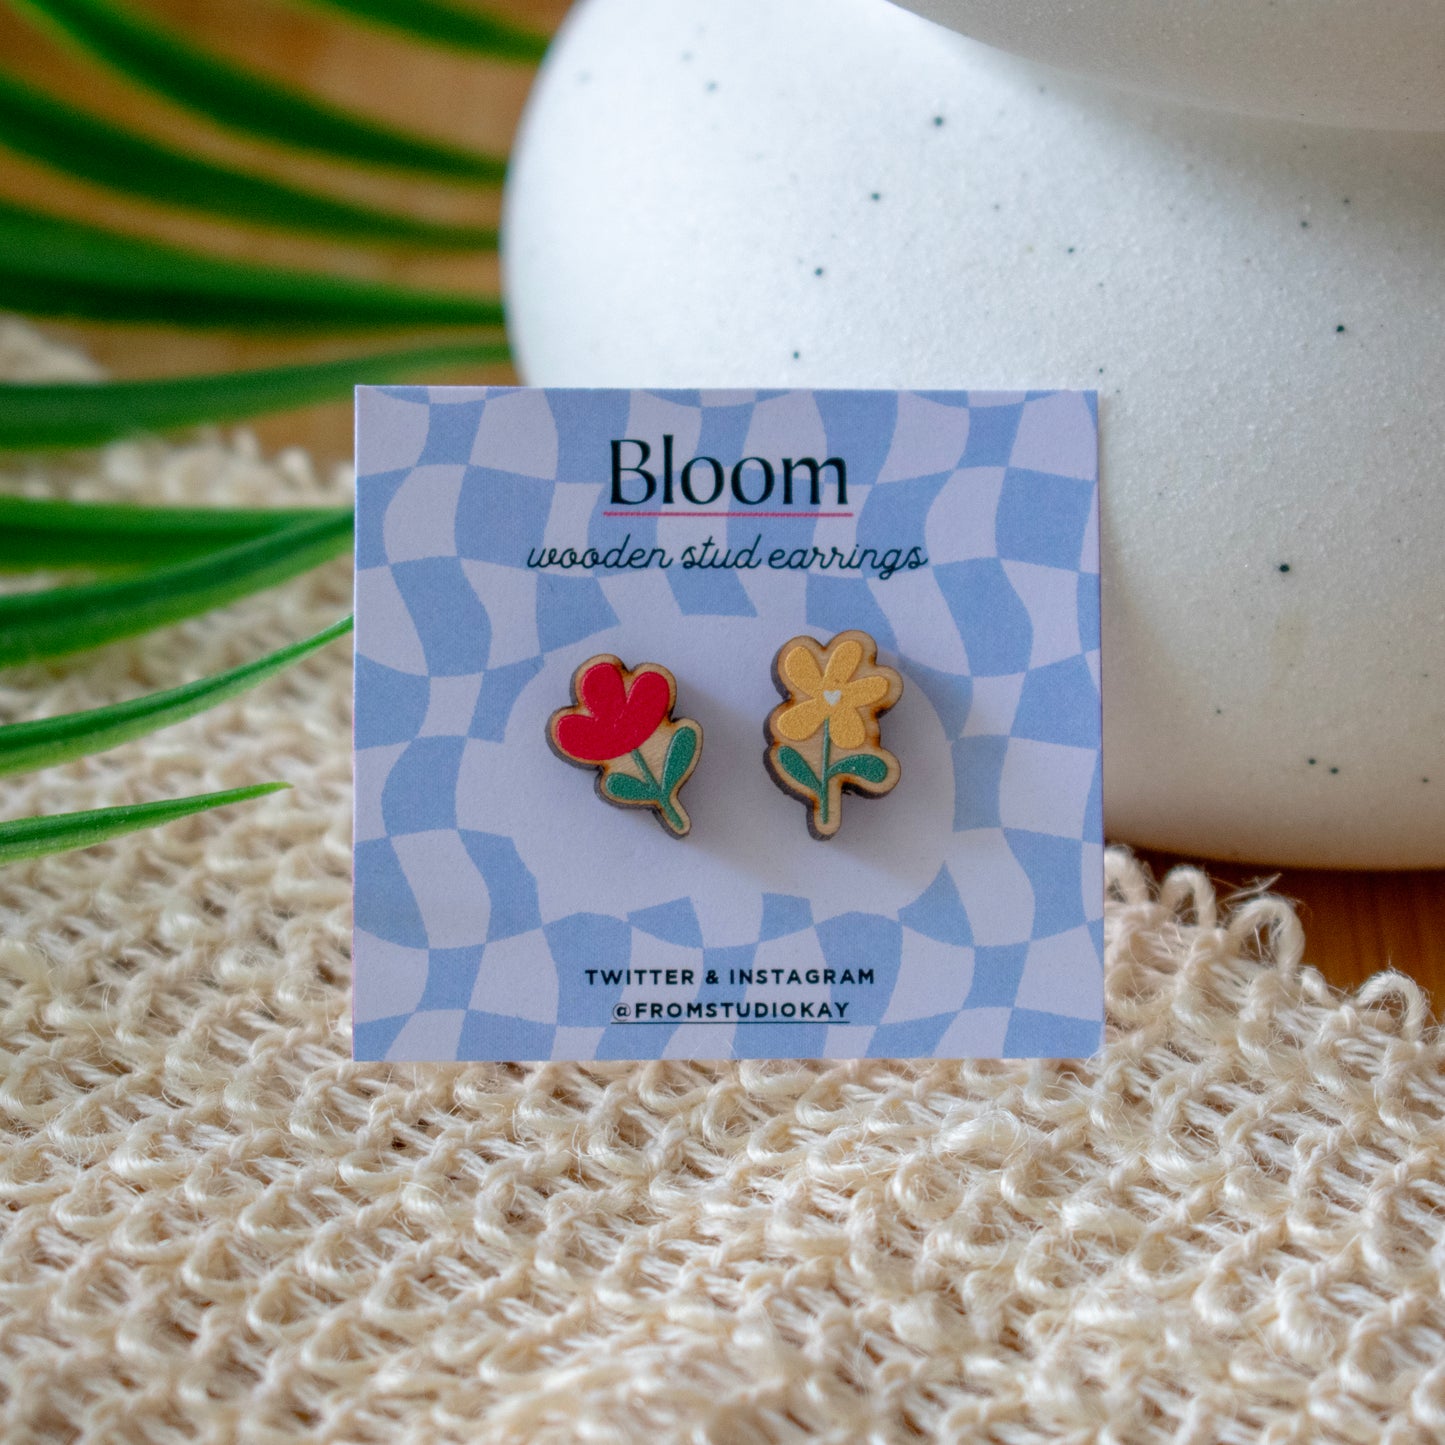 Bloom wooden stud earrings